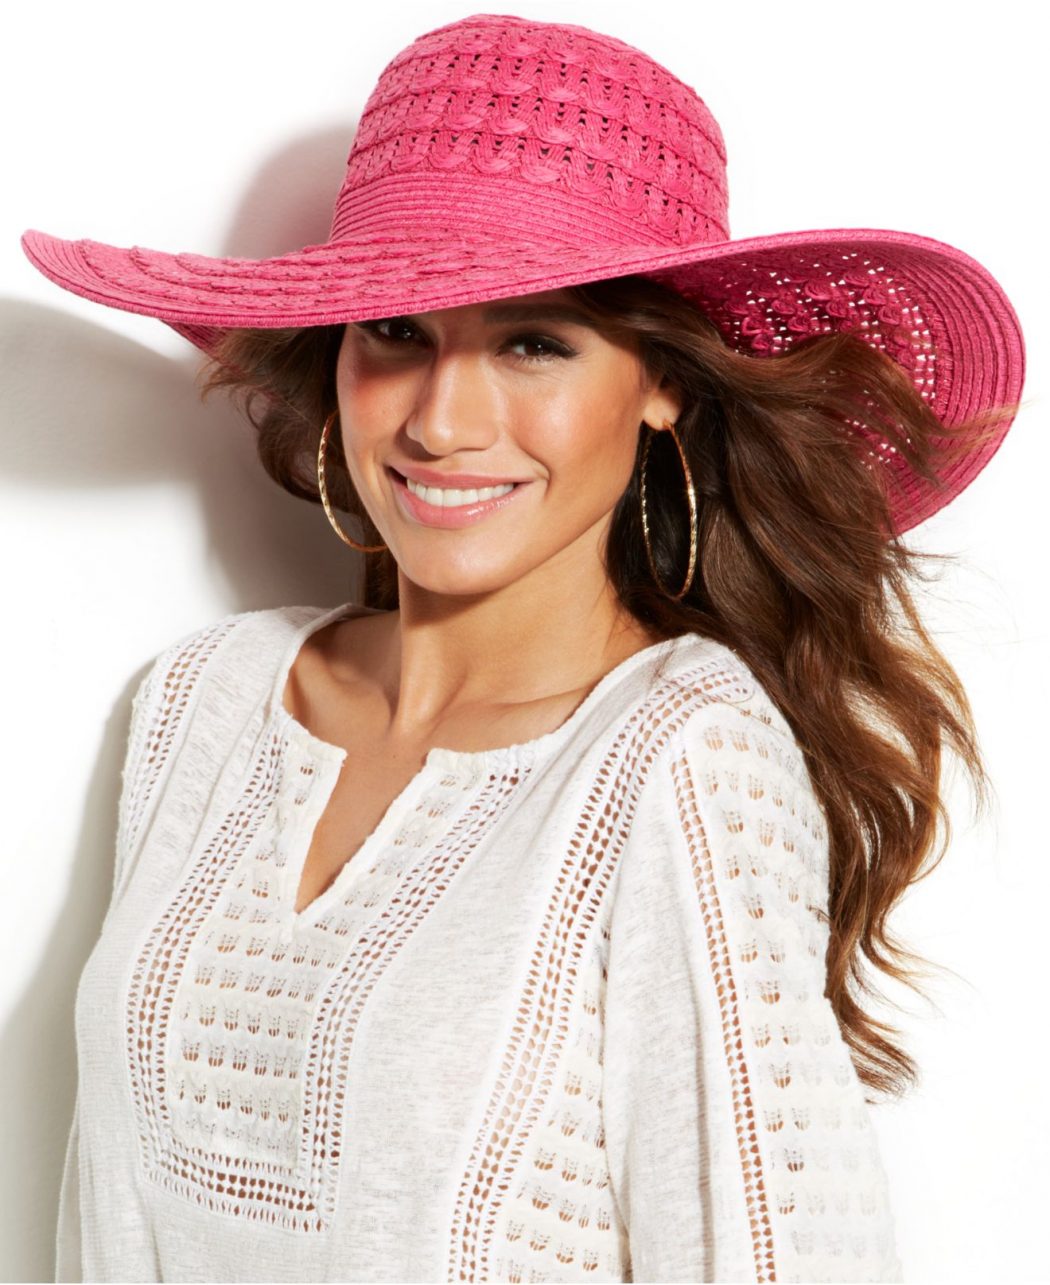 Super Floppy Hats1 10 Women’s Hat Trends For Summer - 10